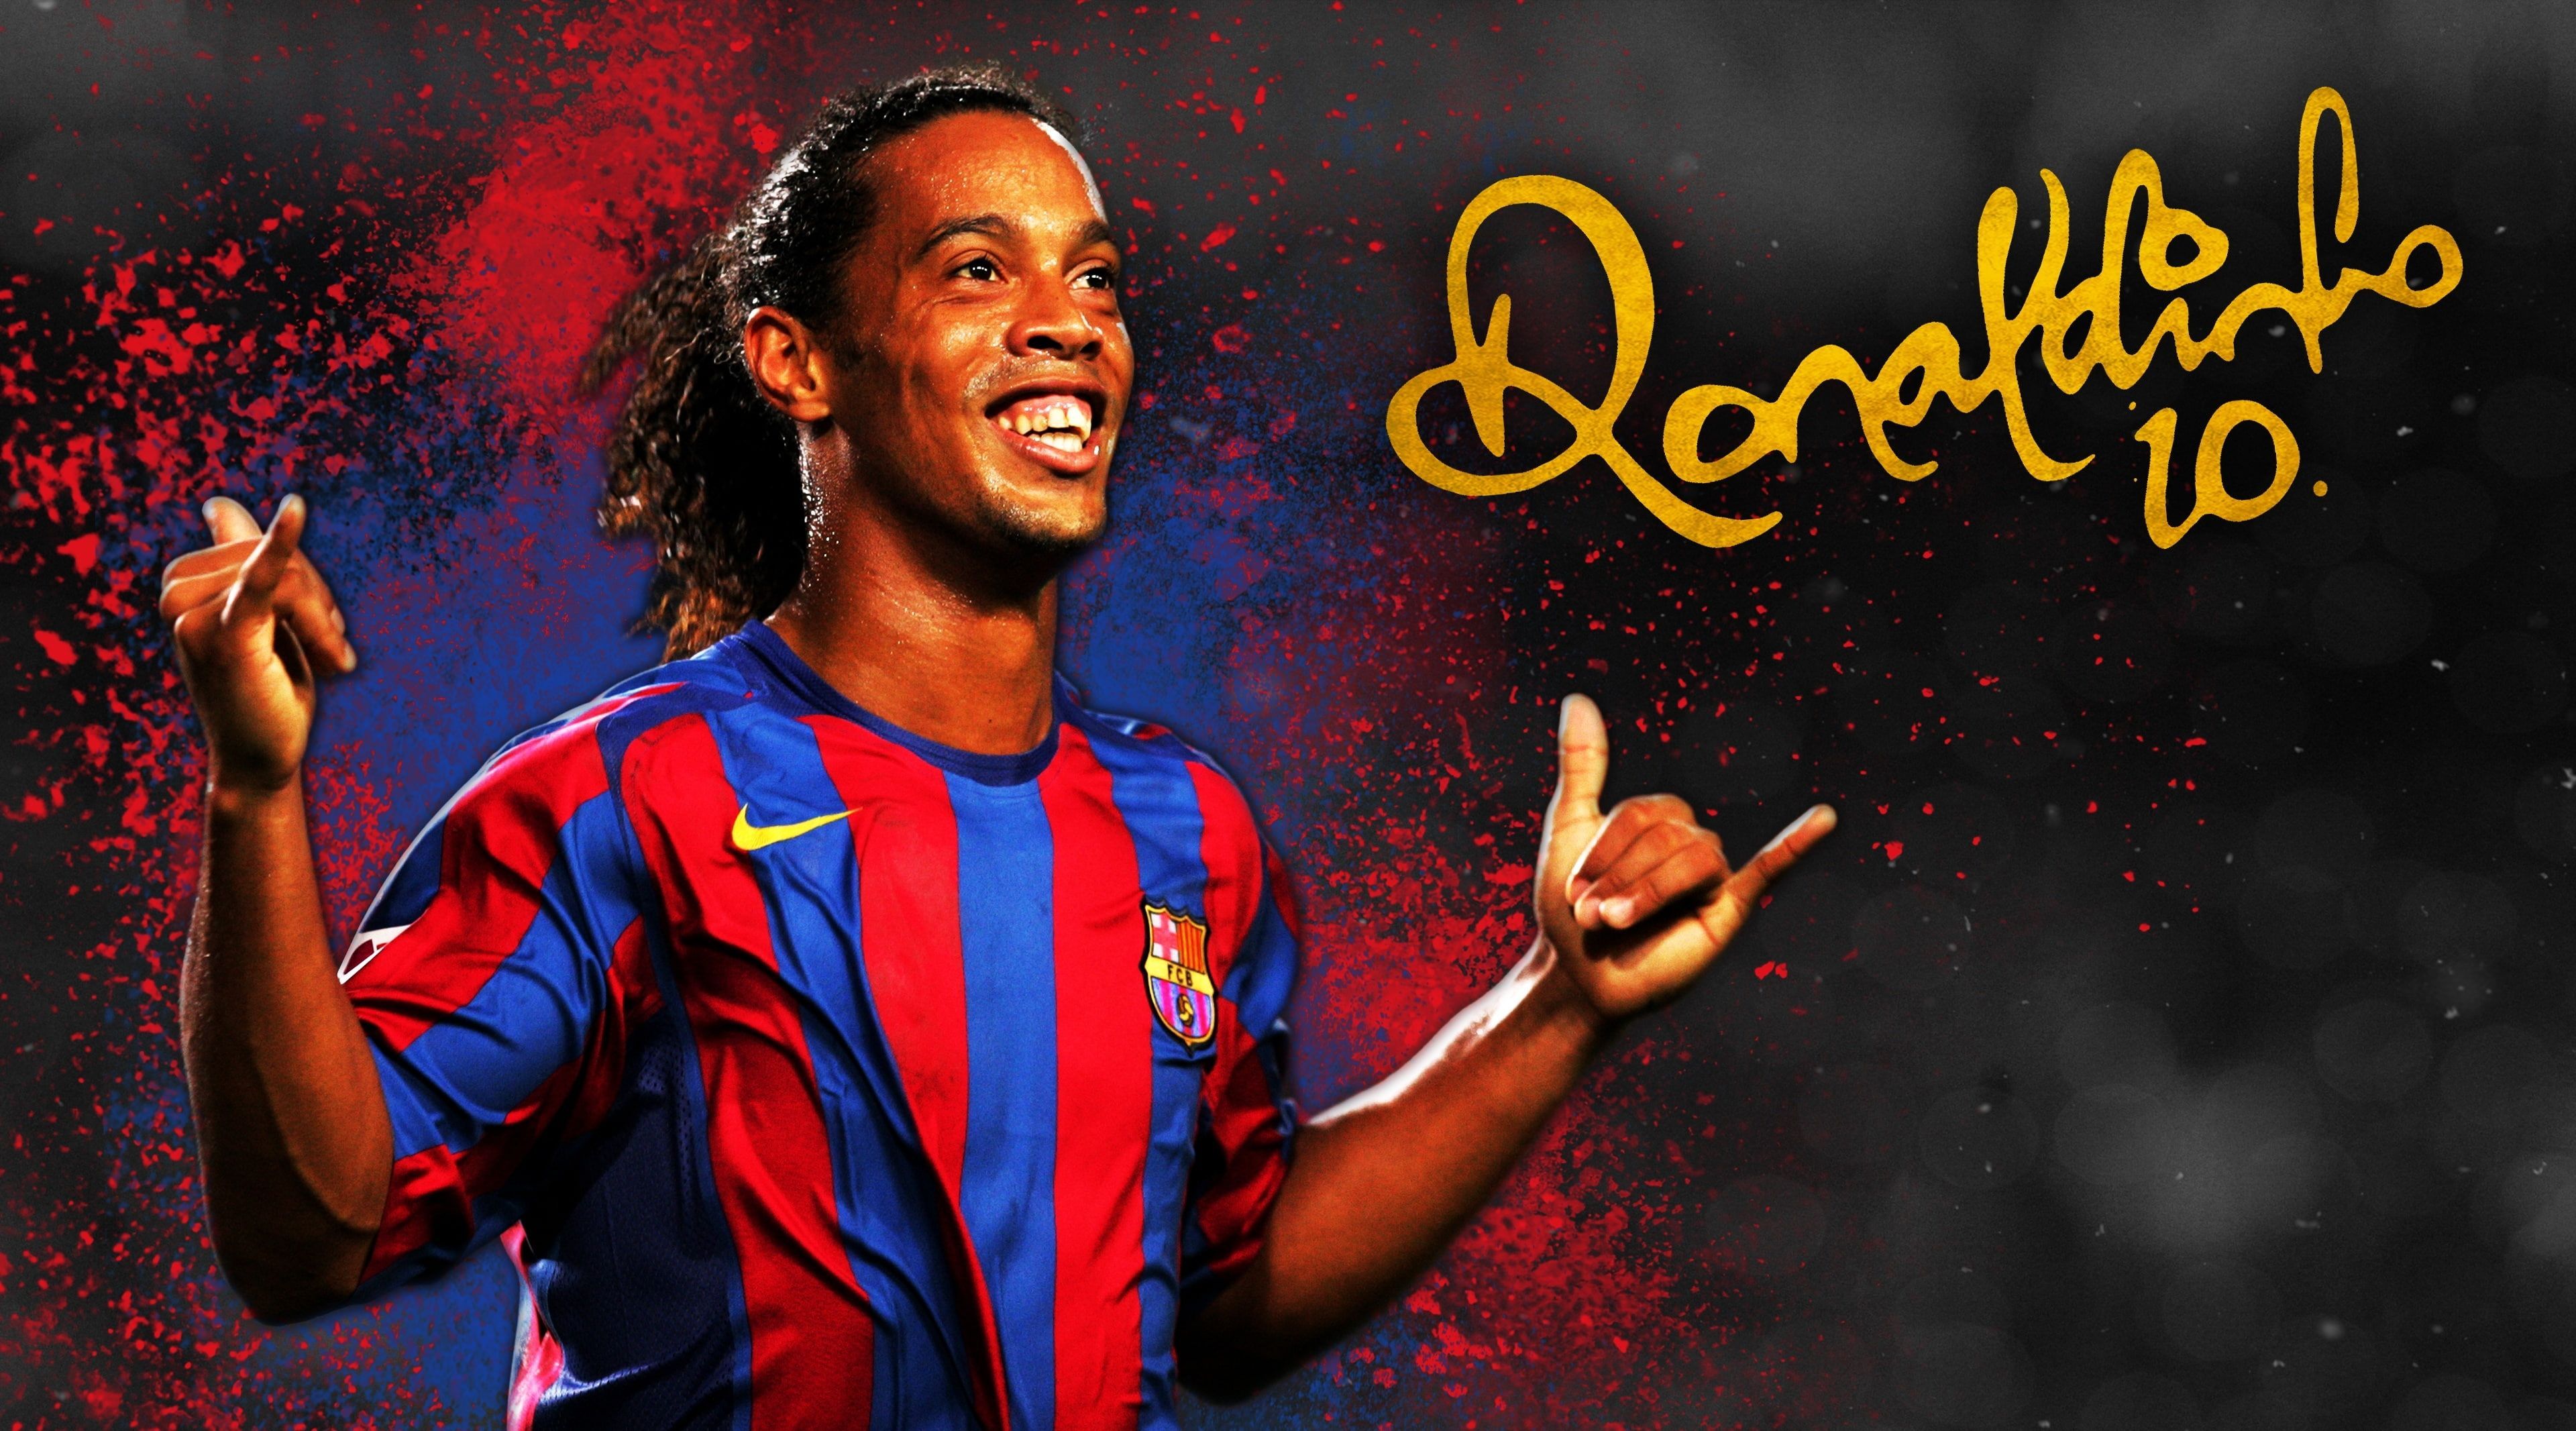 Ronaldinho Barcelona, Ronaldinho digital wallpaper #Sports #Football K # wallpaper #hdwallpaper #de. Ronaldinho wallpaper, Football wallpaper, Ronaldinho gaúcho